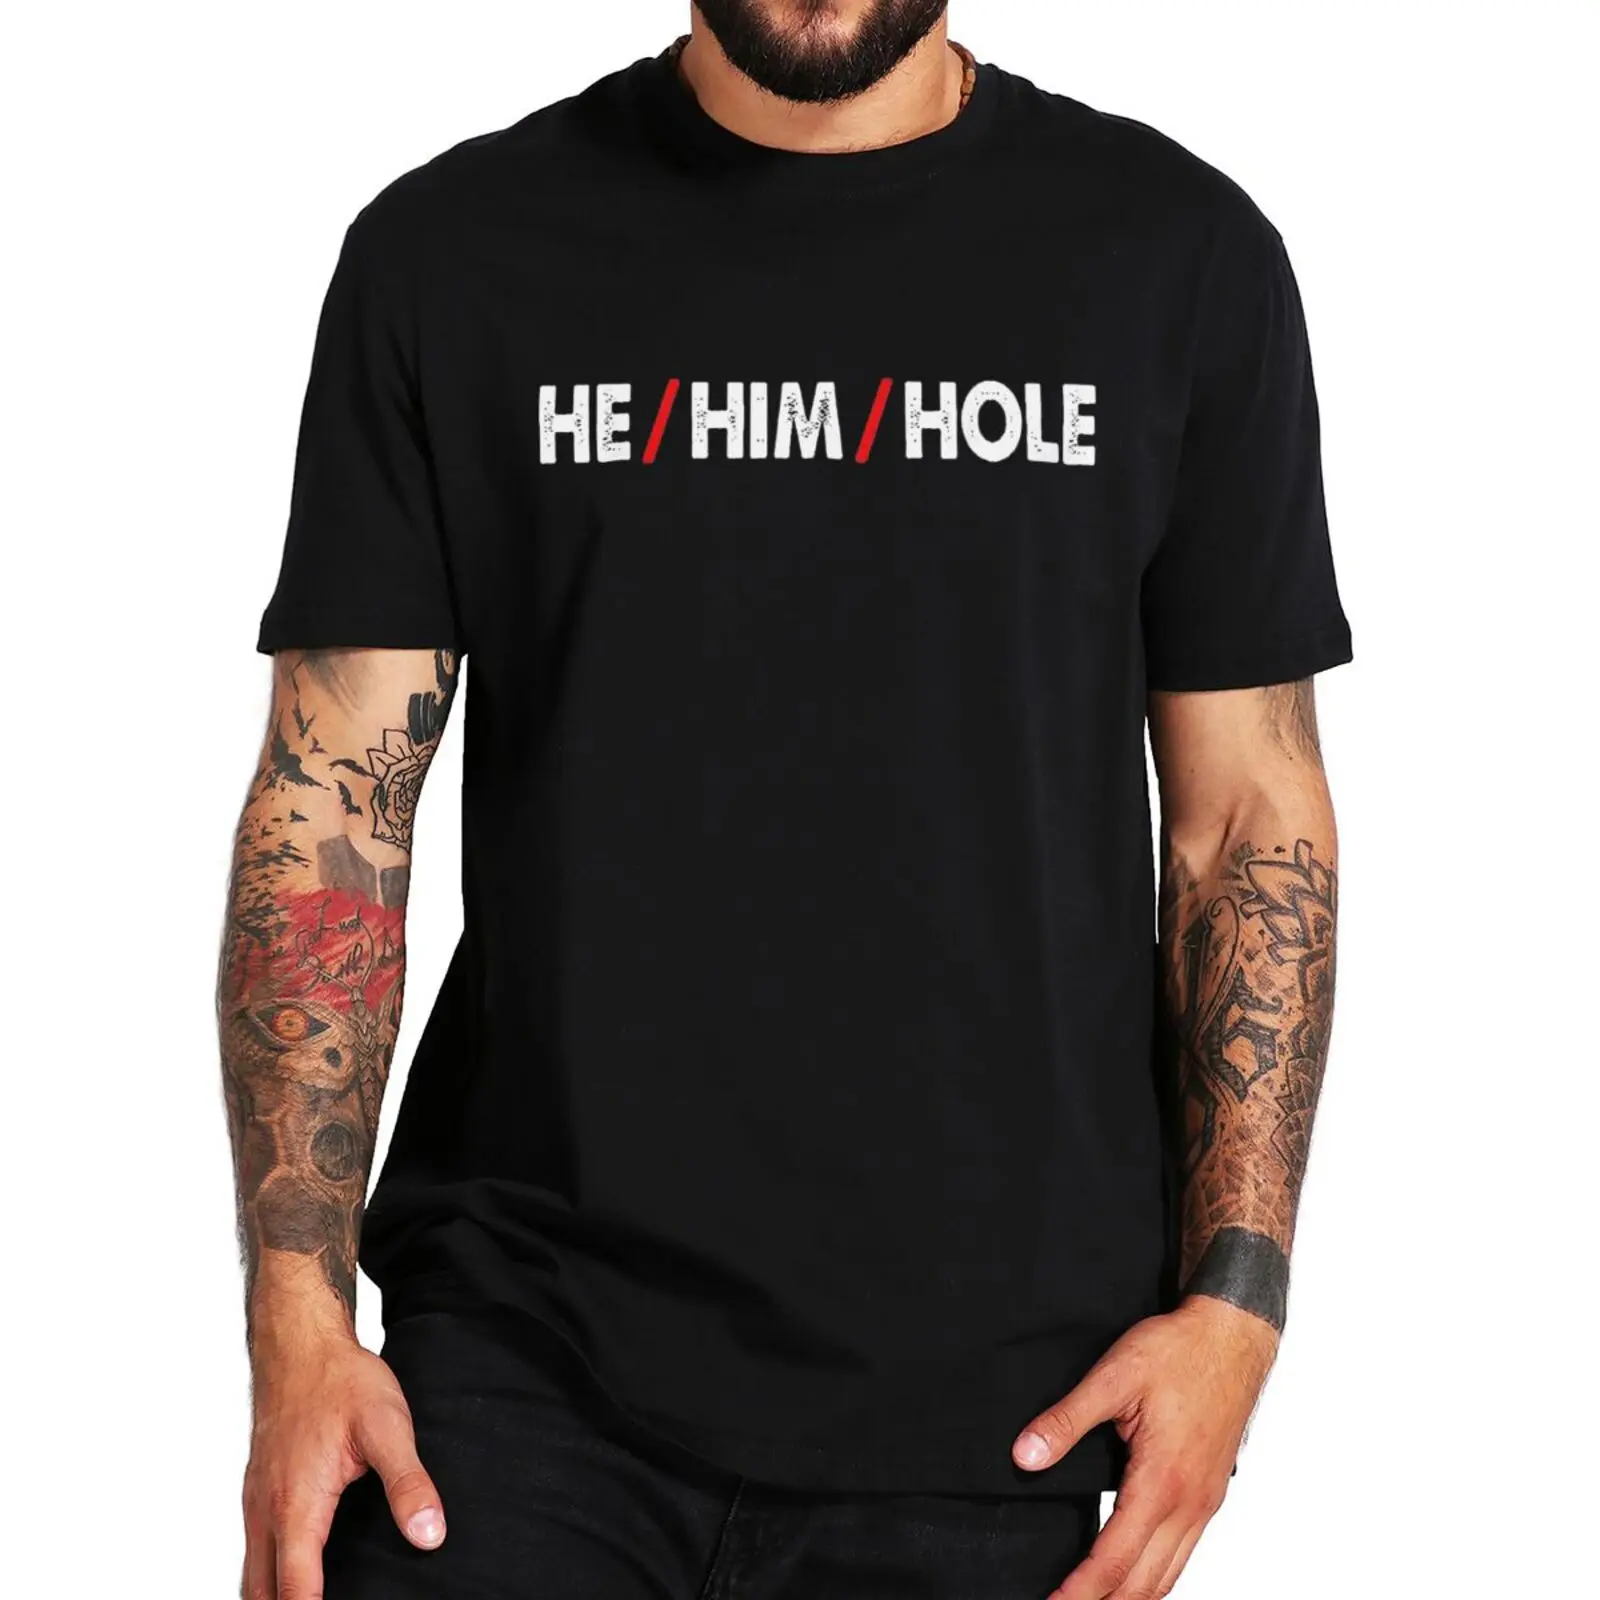 

He Him Hole T Shirt LGBT Funny Sarcastic Men's Tshirt 100% Cotton Short Sleeve Summer Tee Tops Basic Casual Homme Camiseta